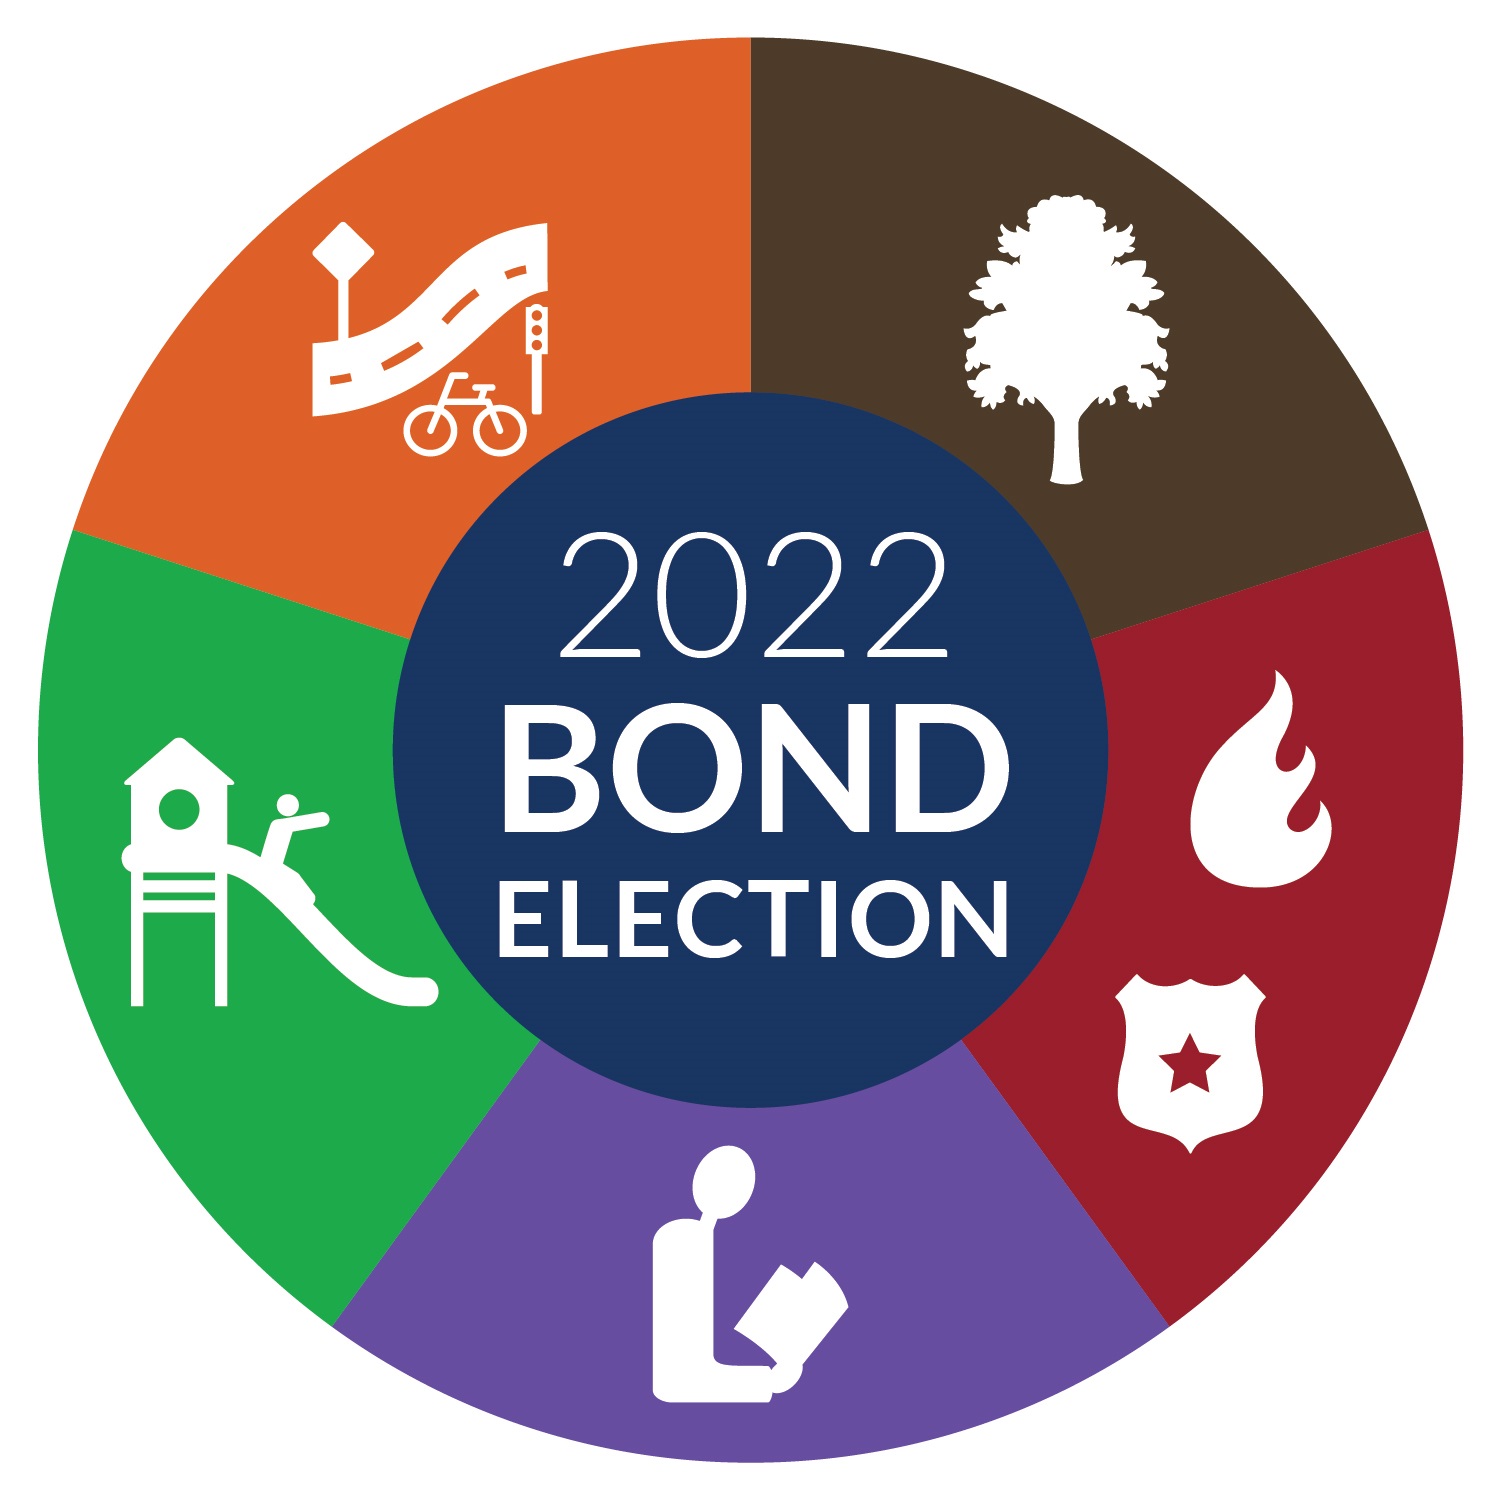 2022 Bond Election wheel department graphic icon